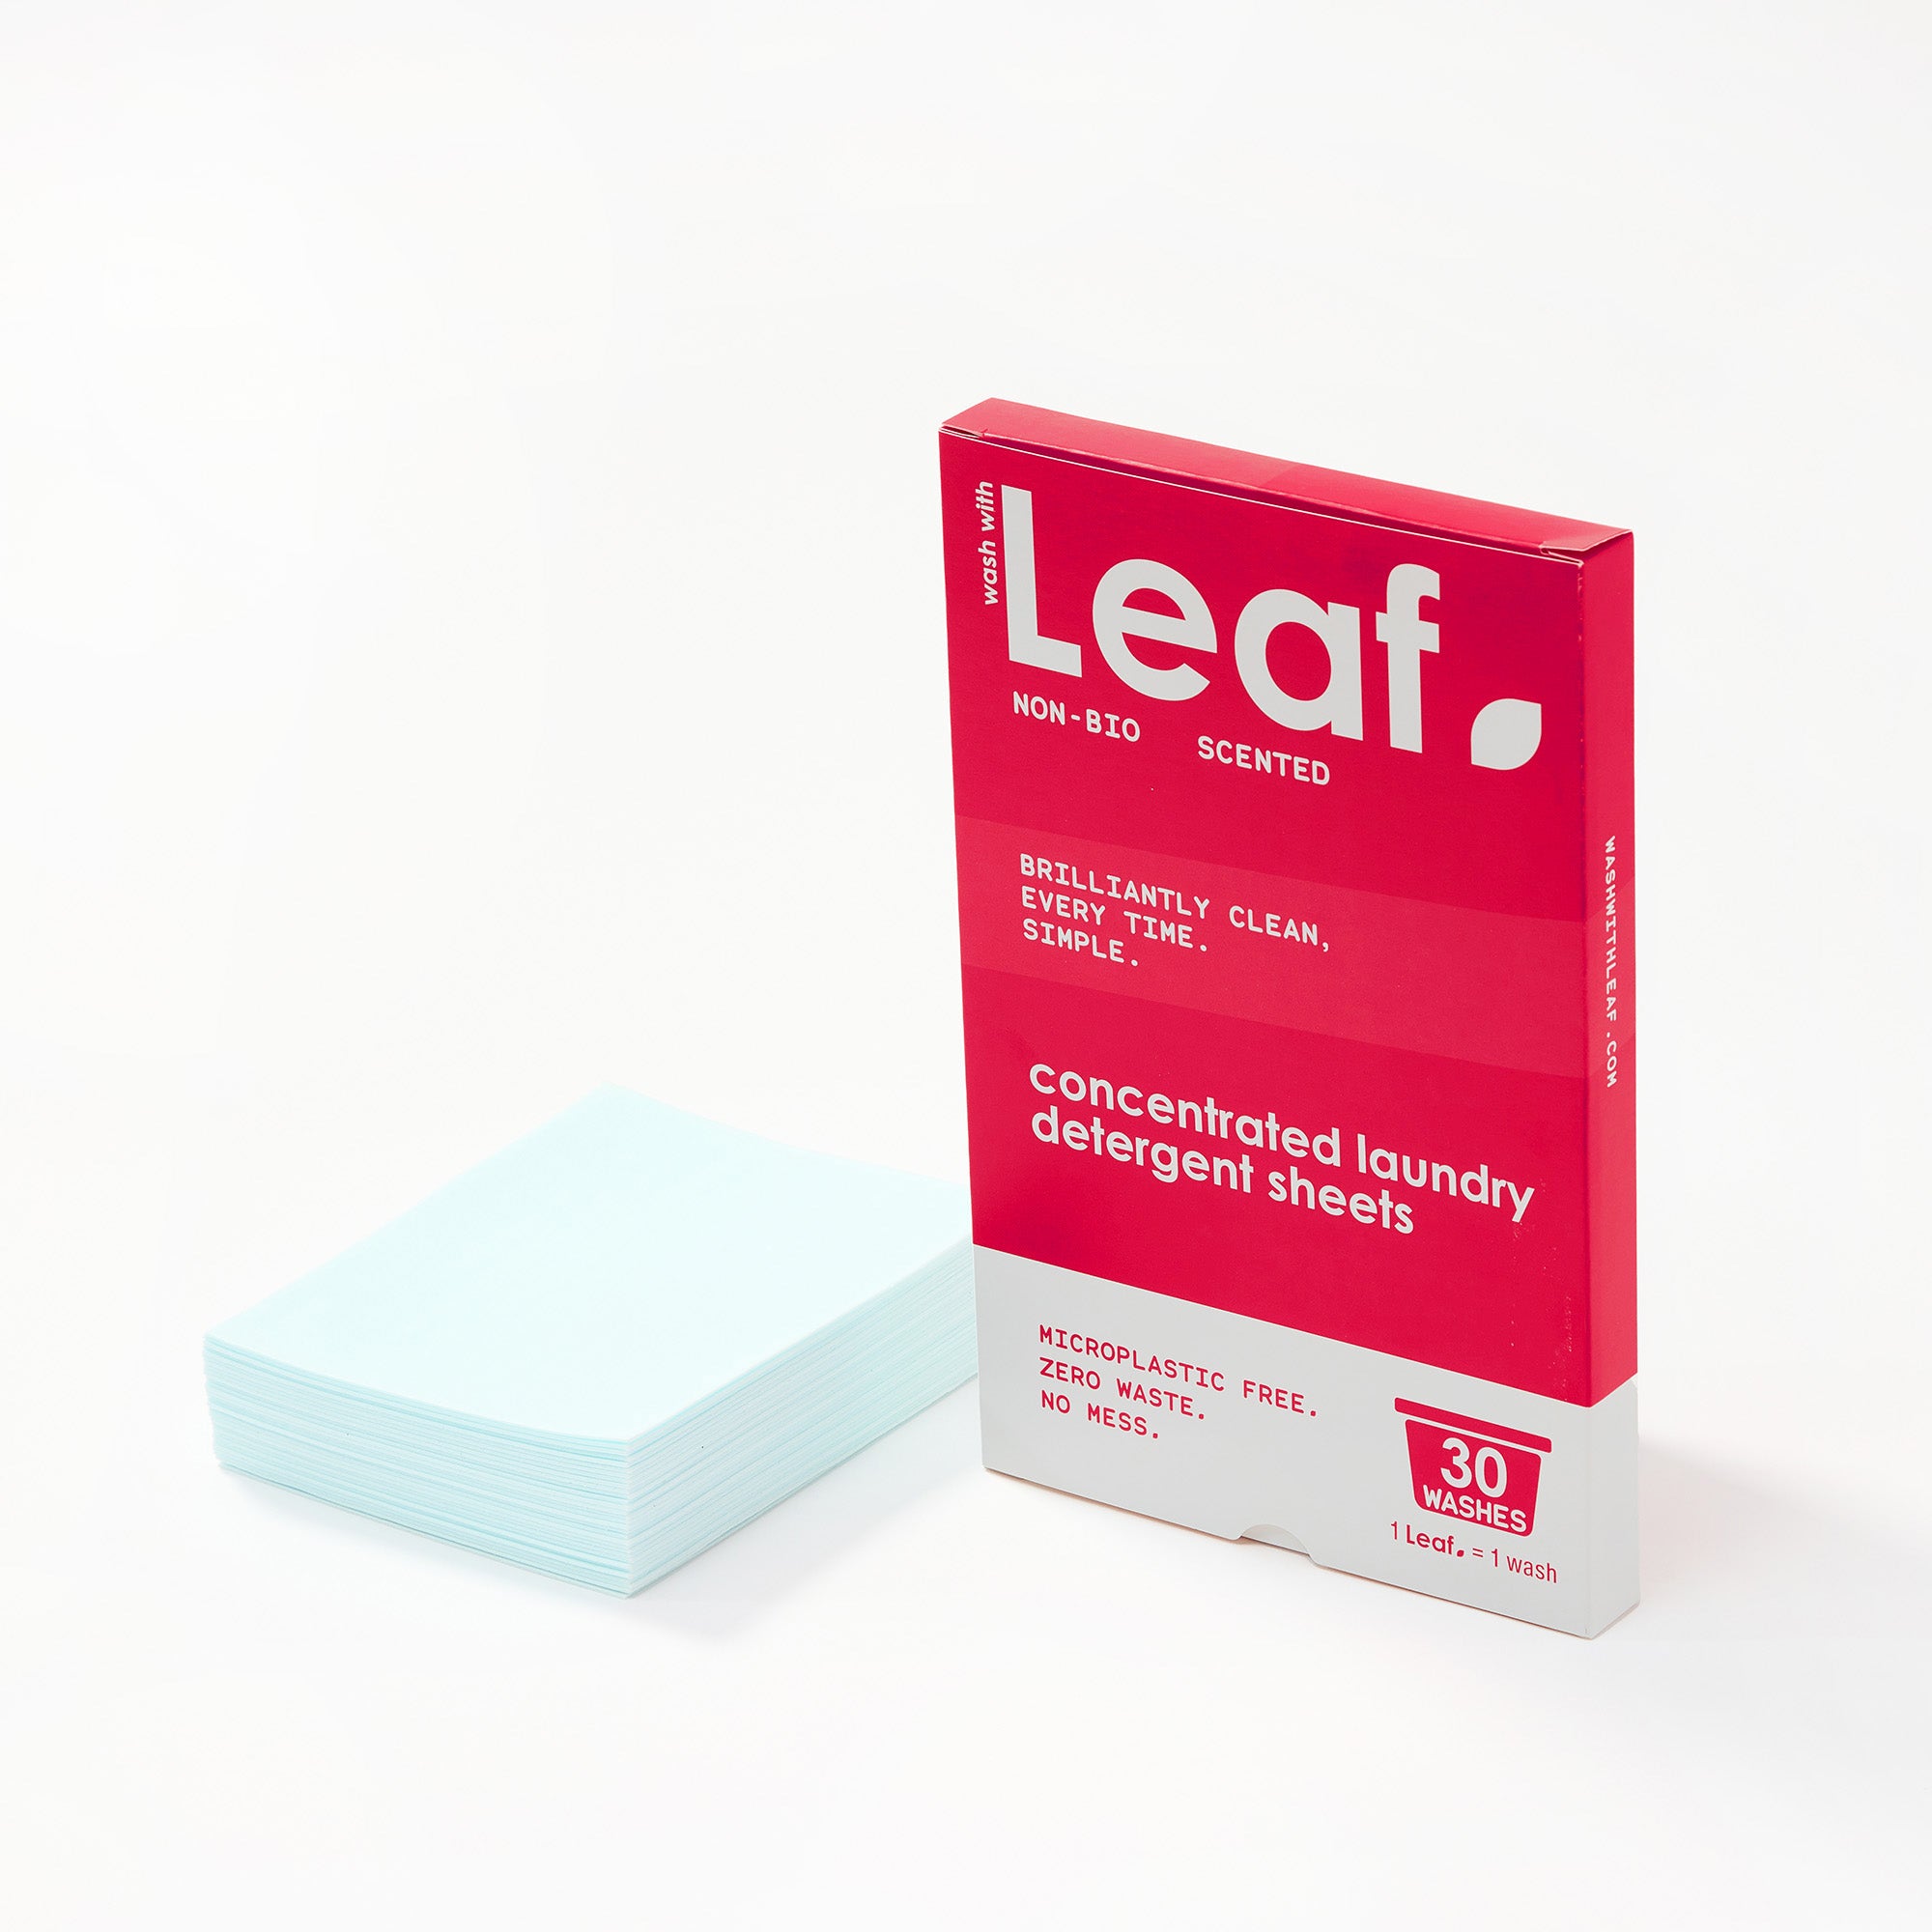 Leaf non-bio 30 pack - letterbox